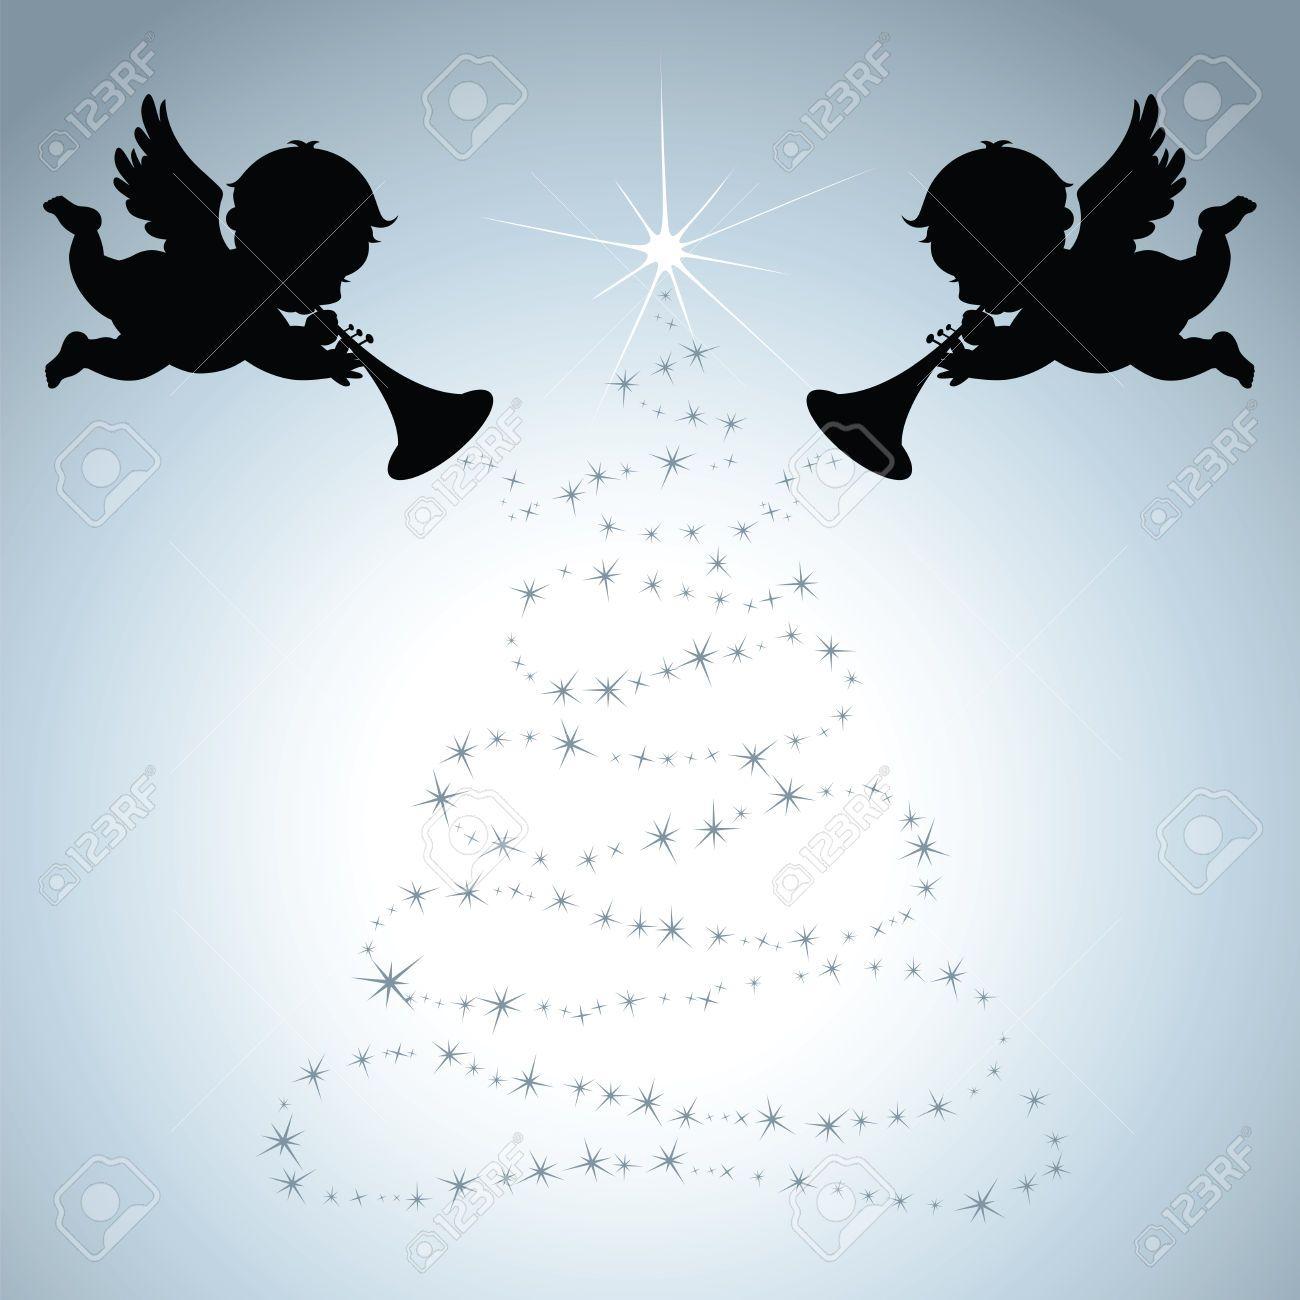 image Of Christmas Angels